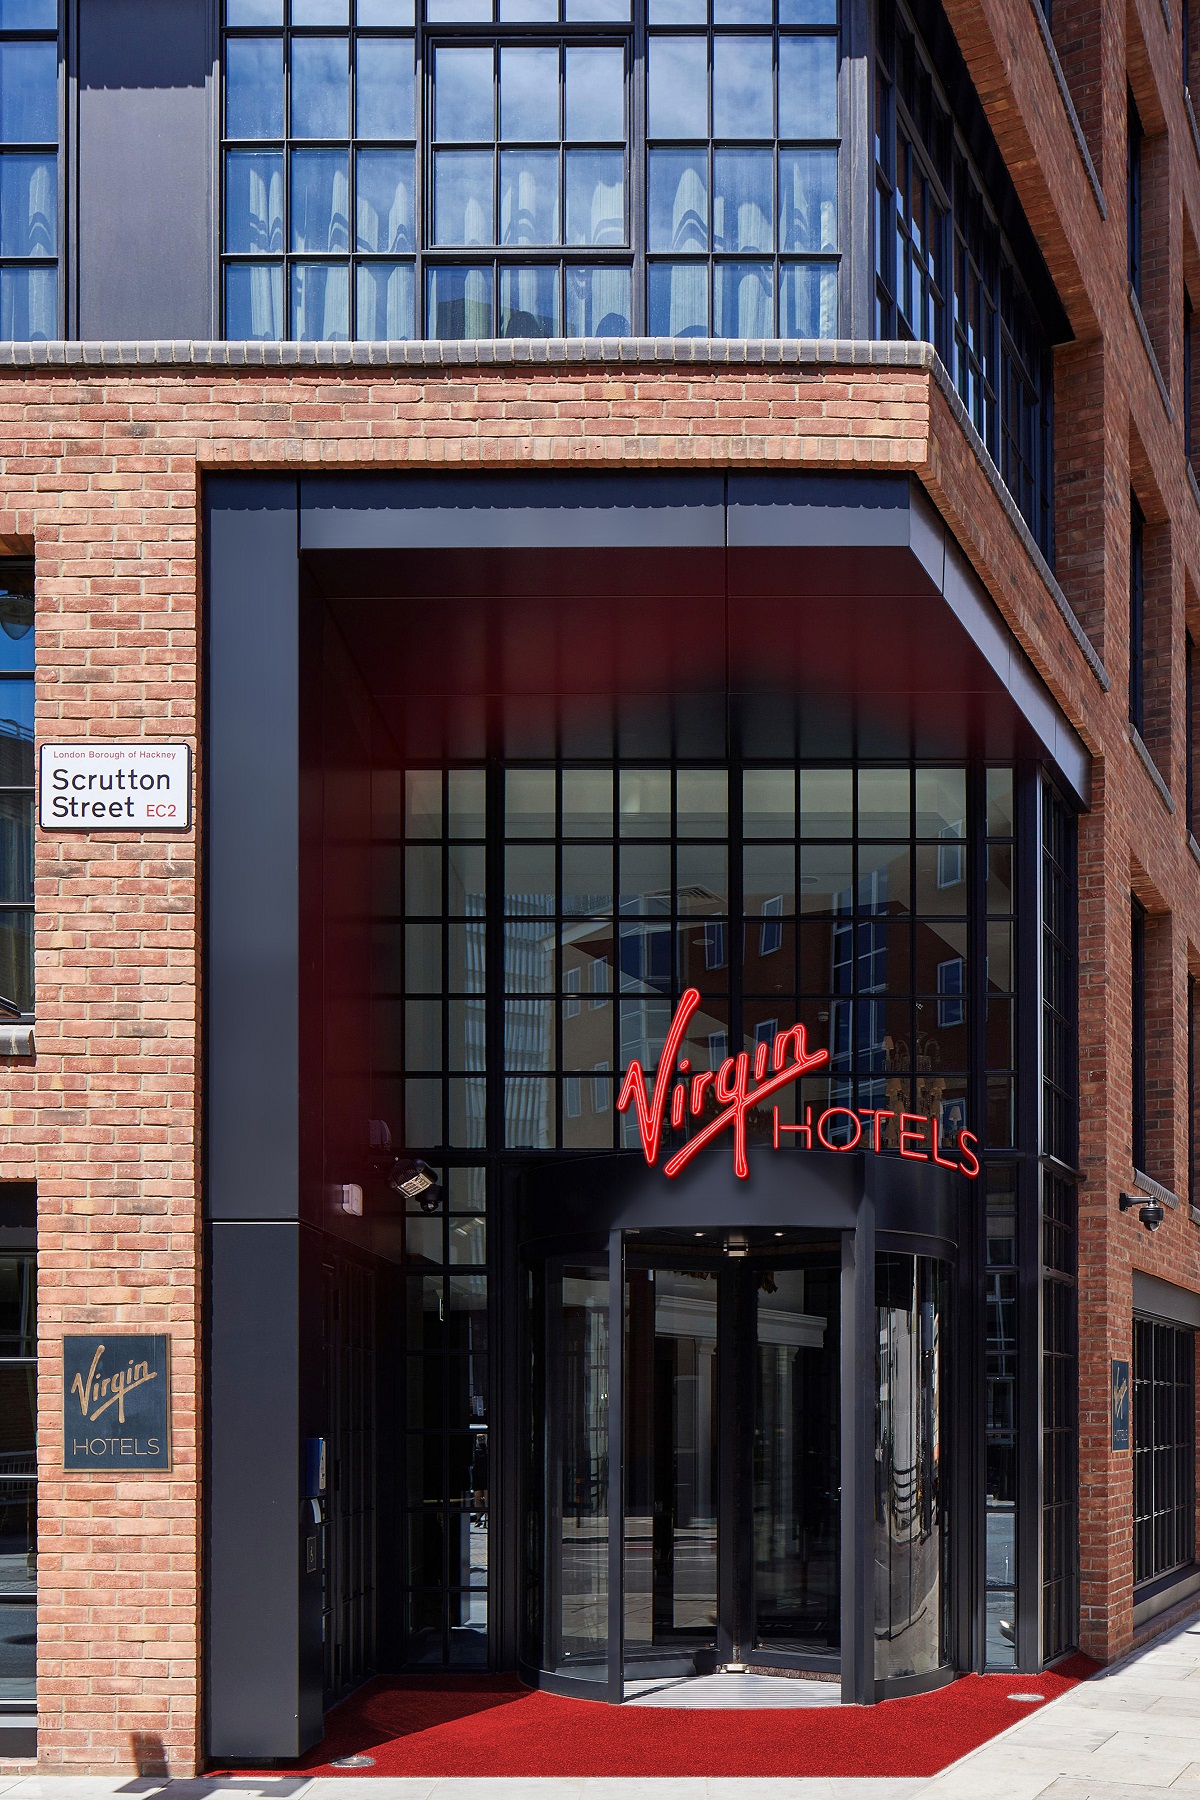 exterior façade and entrance to Virgin hotels London Shoreditch